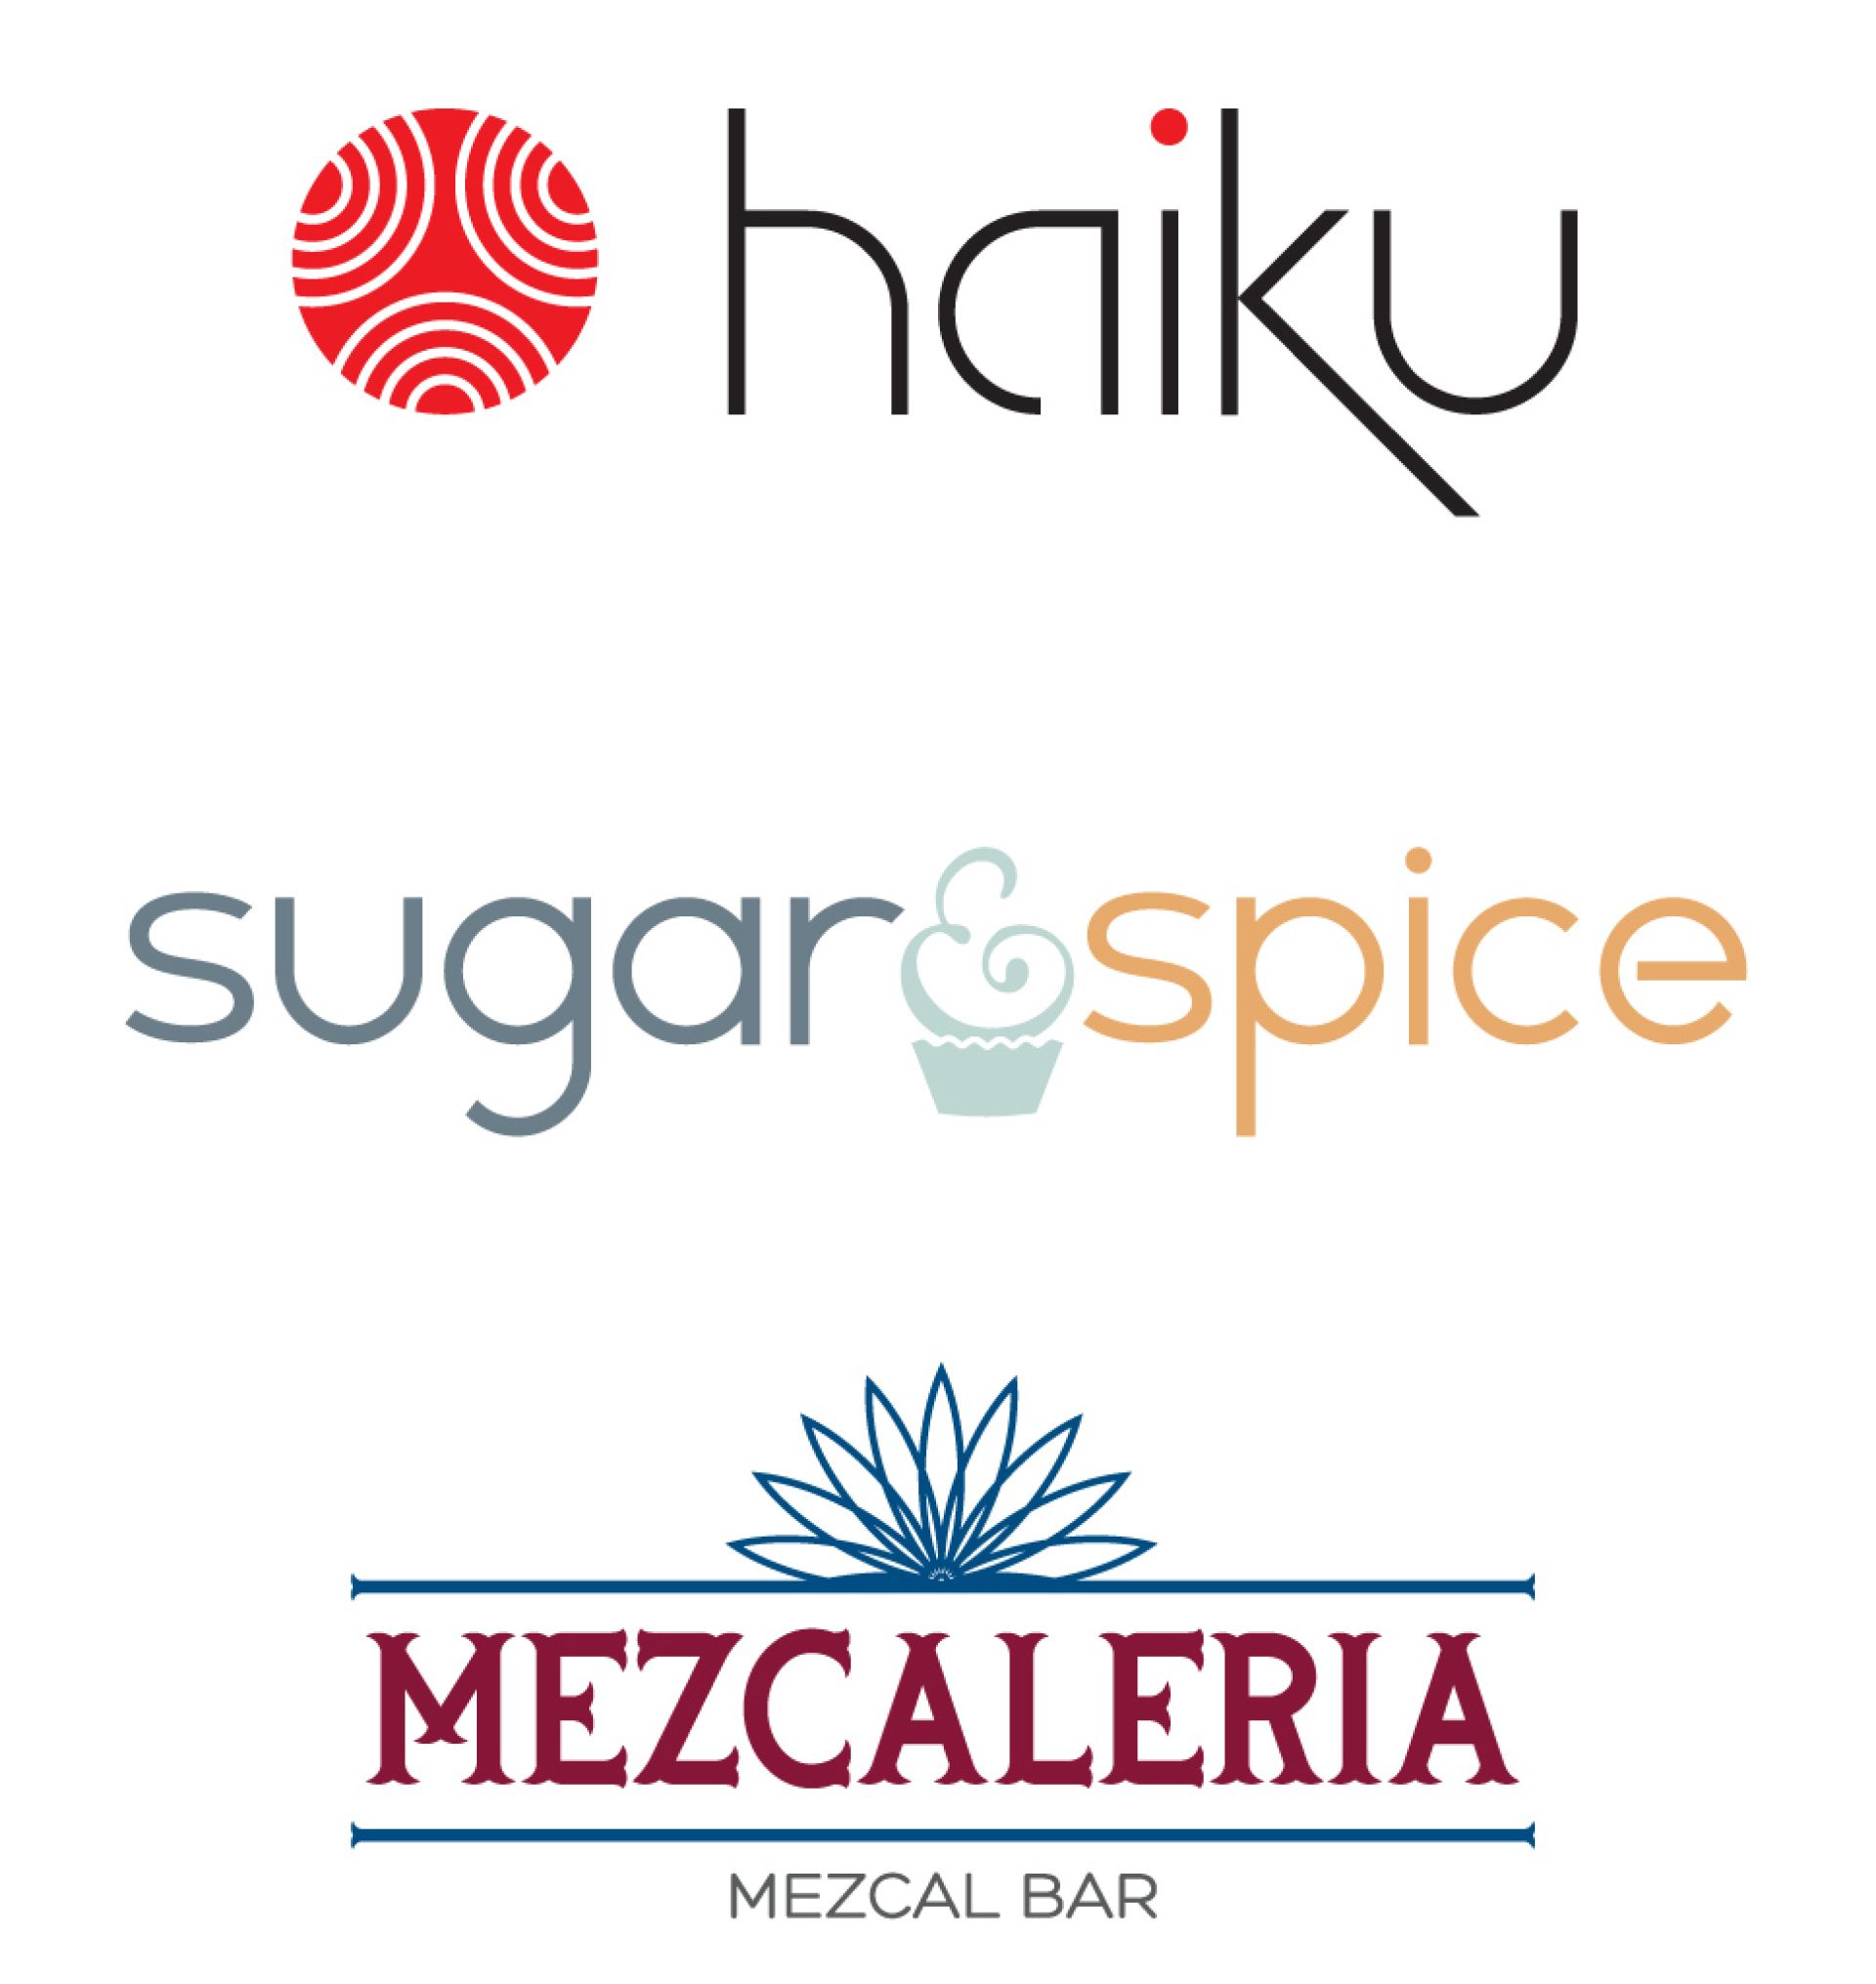 haiku, sugar & spice, mezcaleria logos